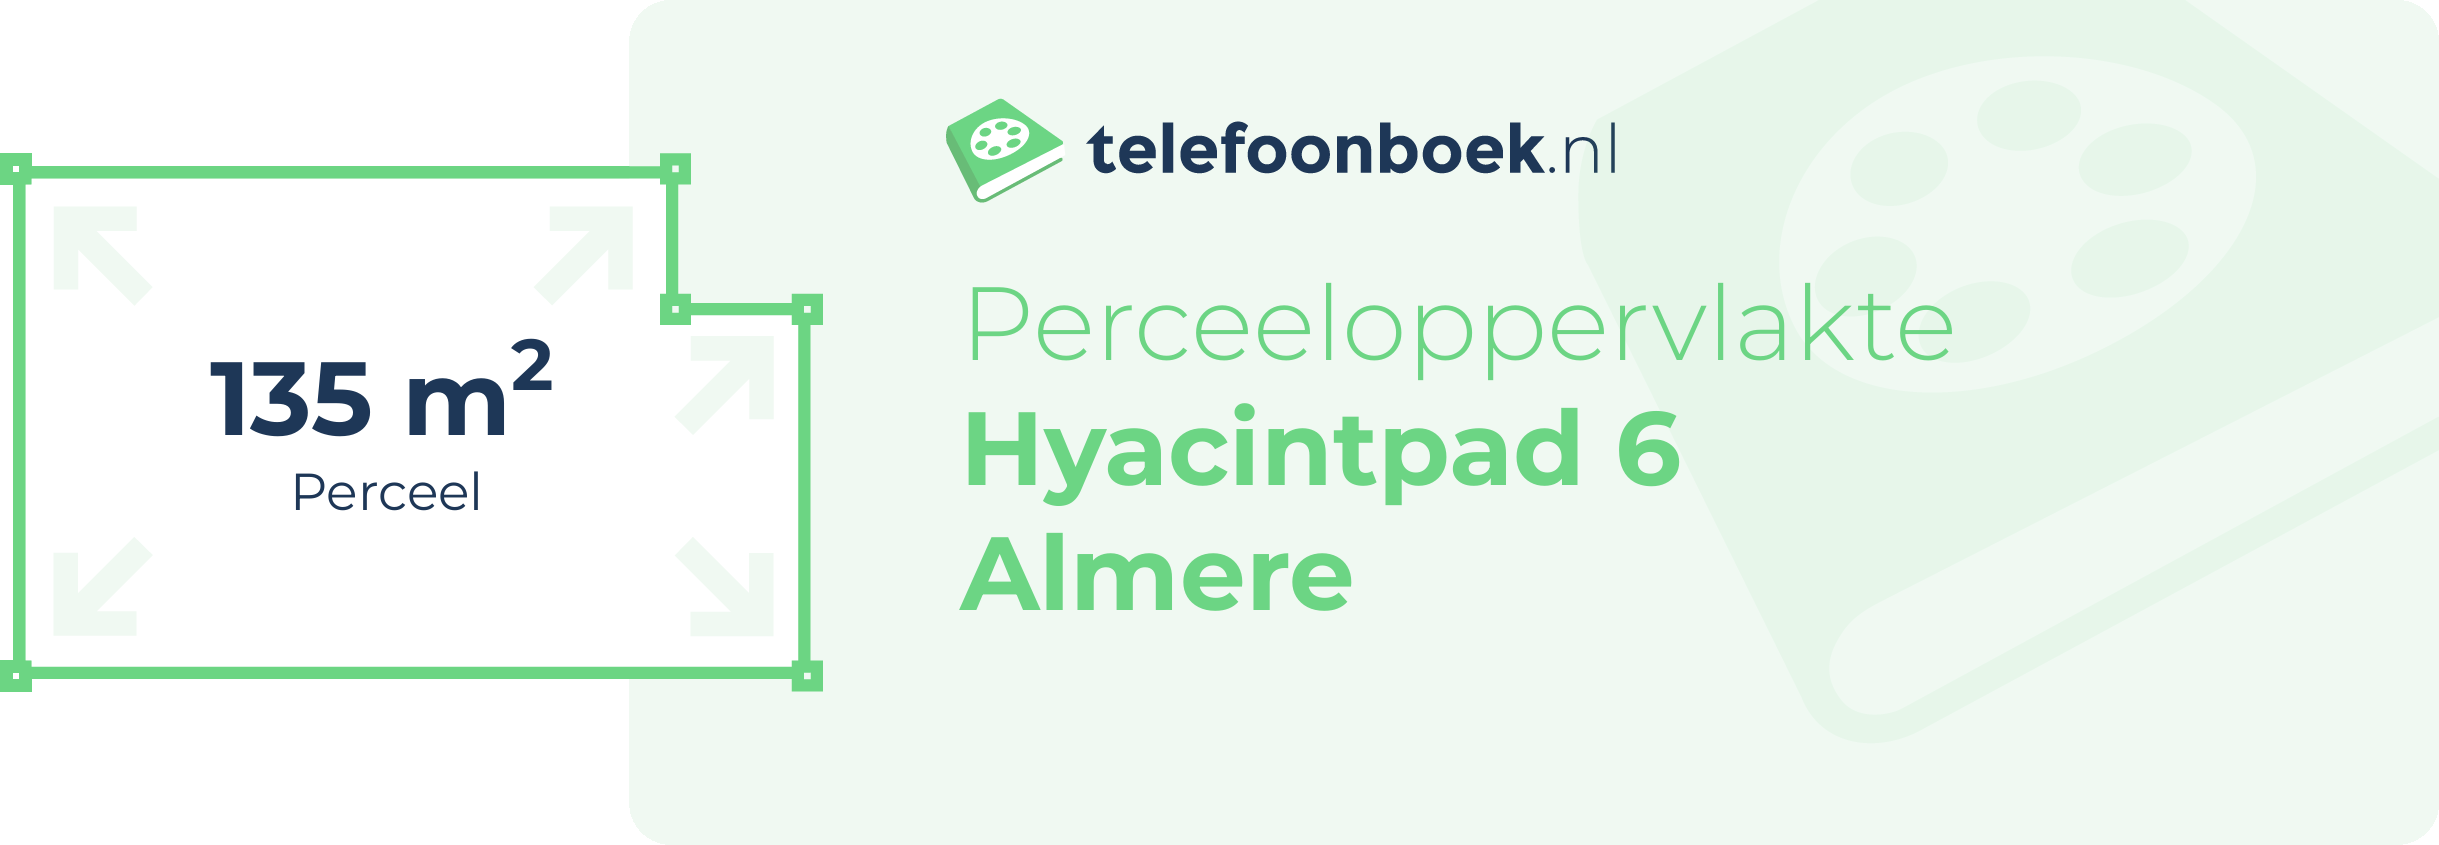 Perceeloppervlakte Hyacintpad 6 Almere